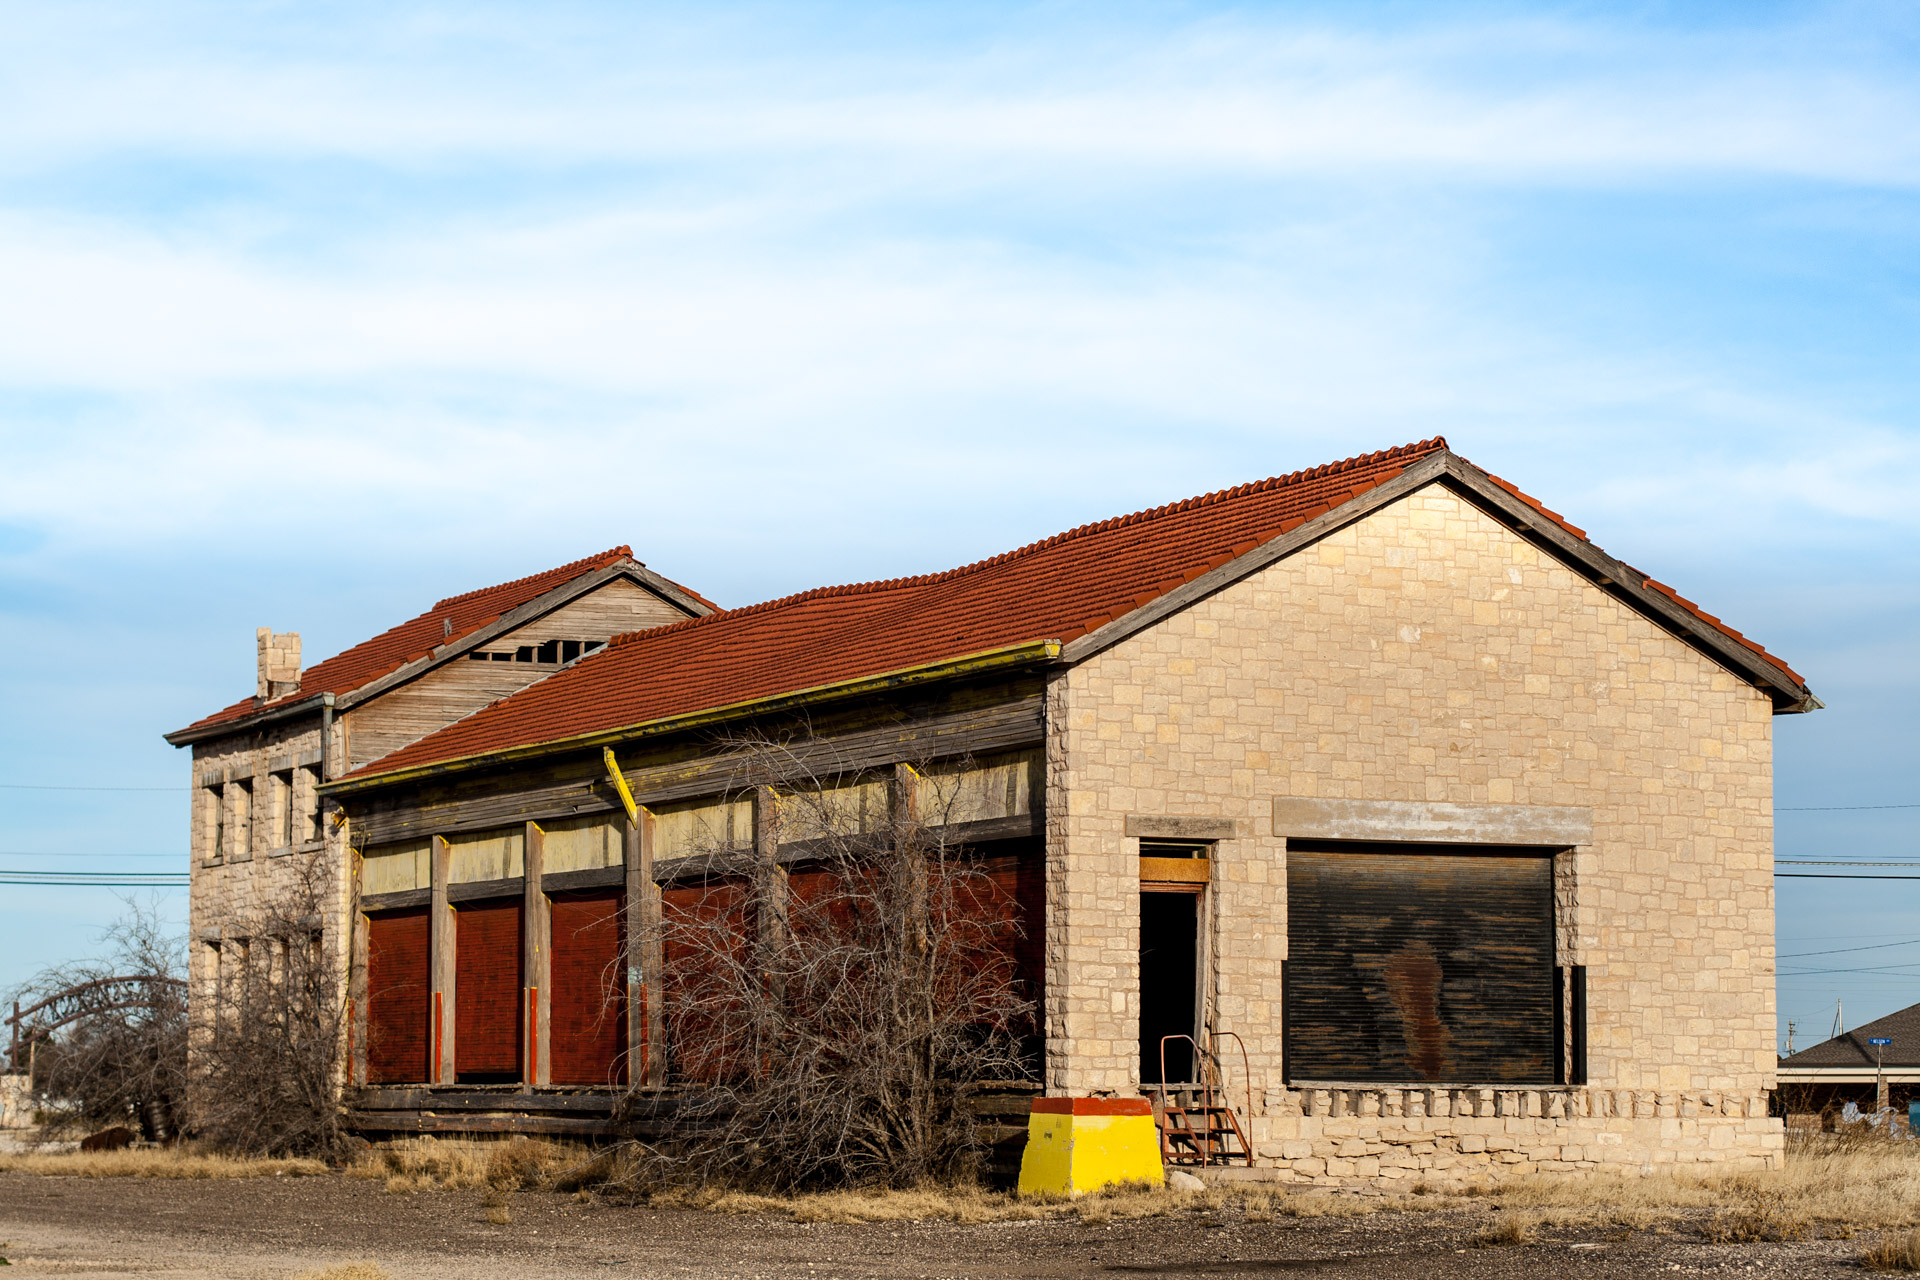 Fort Stockton, Texas - A Colorful Train Depot (angle far)